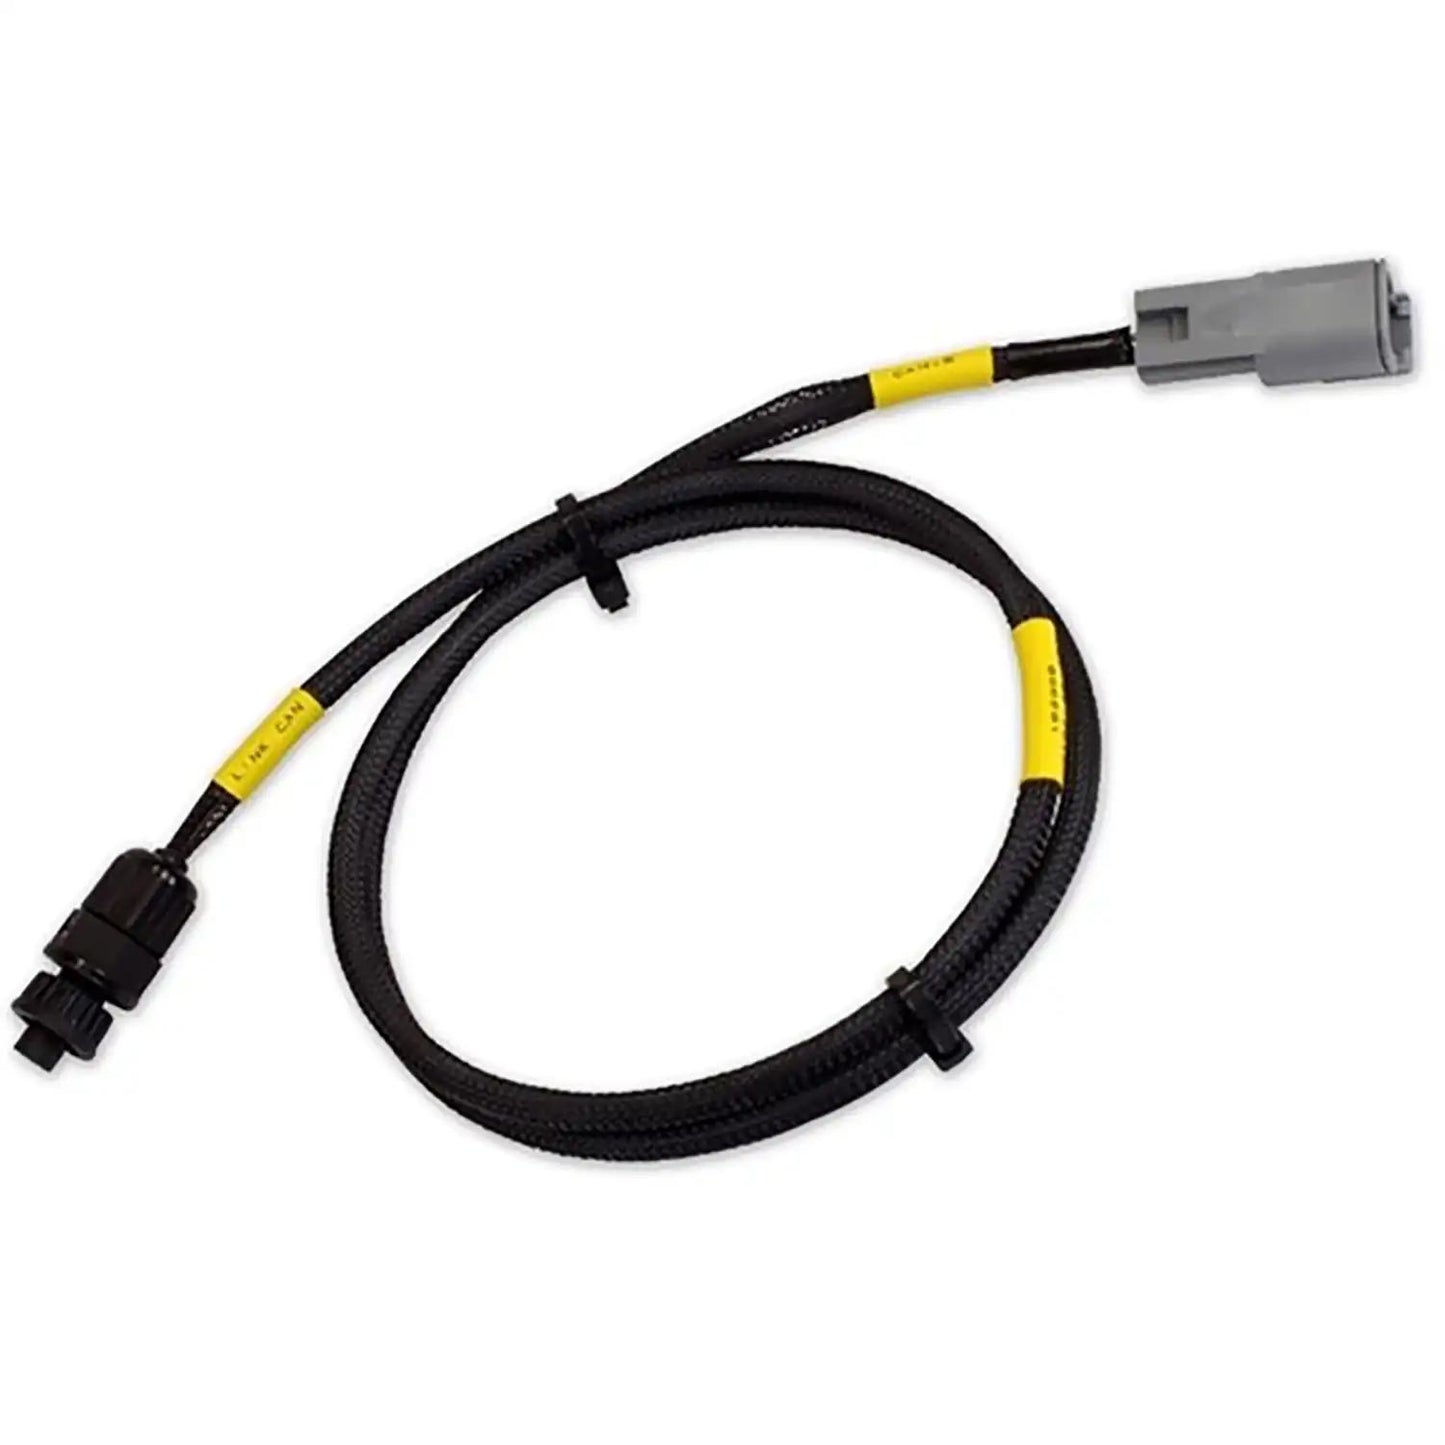 AEM Cd-5/7 Carbon Digital Dash Plug & Play Adapter Harness For Vi-Pec And Link Ecus